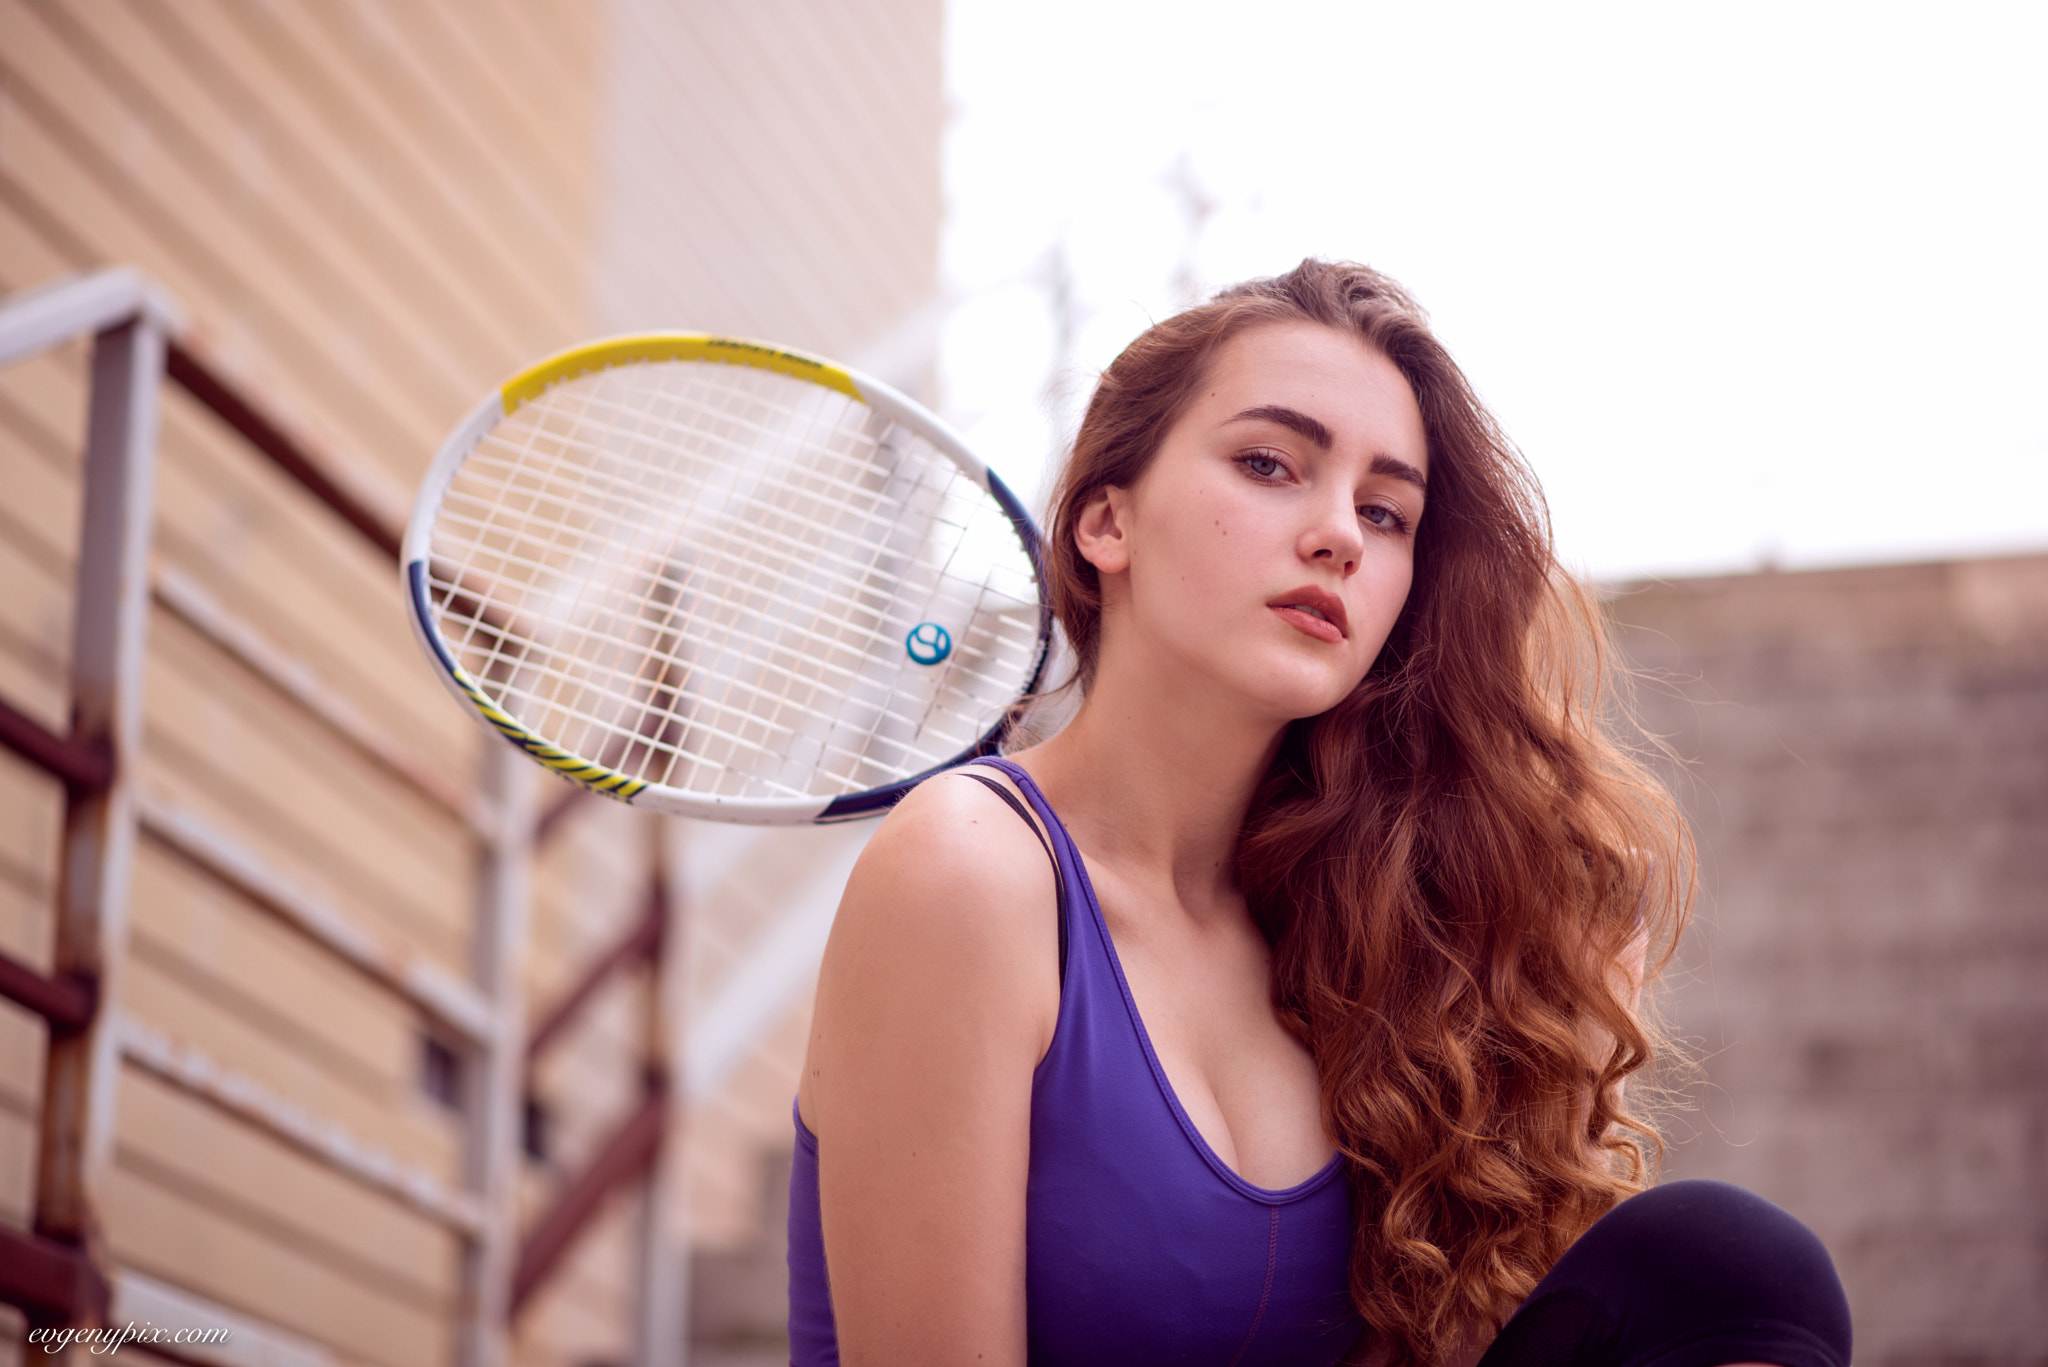 Evgeny Smaltsuga Women Redhead Long Hair Wavy Hair Tennis Rackets Looking At Viewer Sportwear Blue C 2048x1367